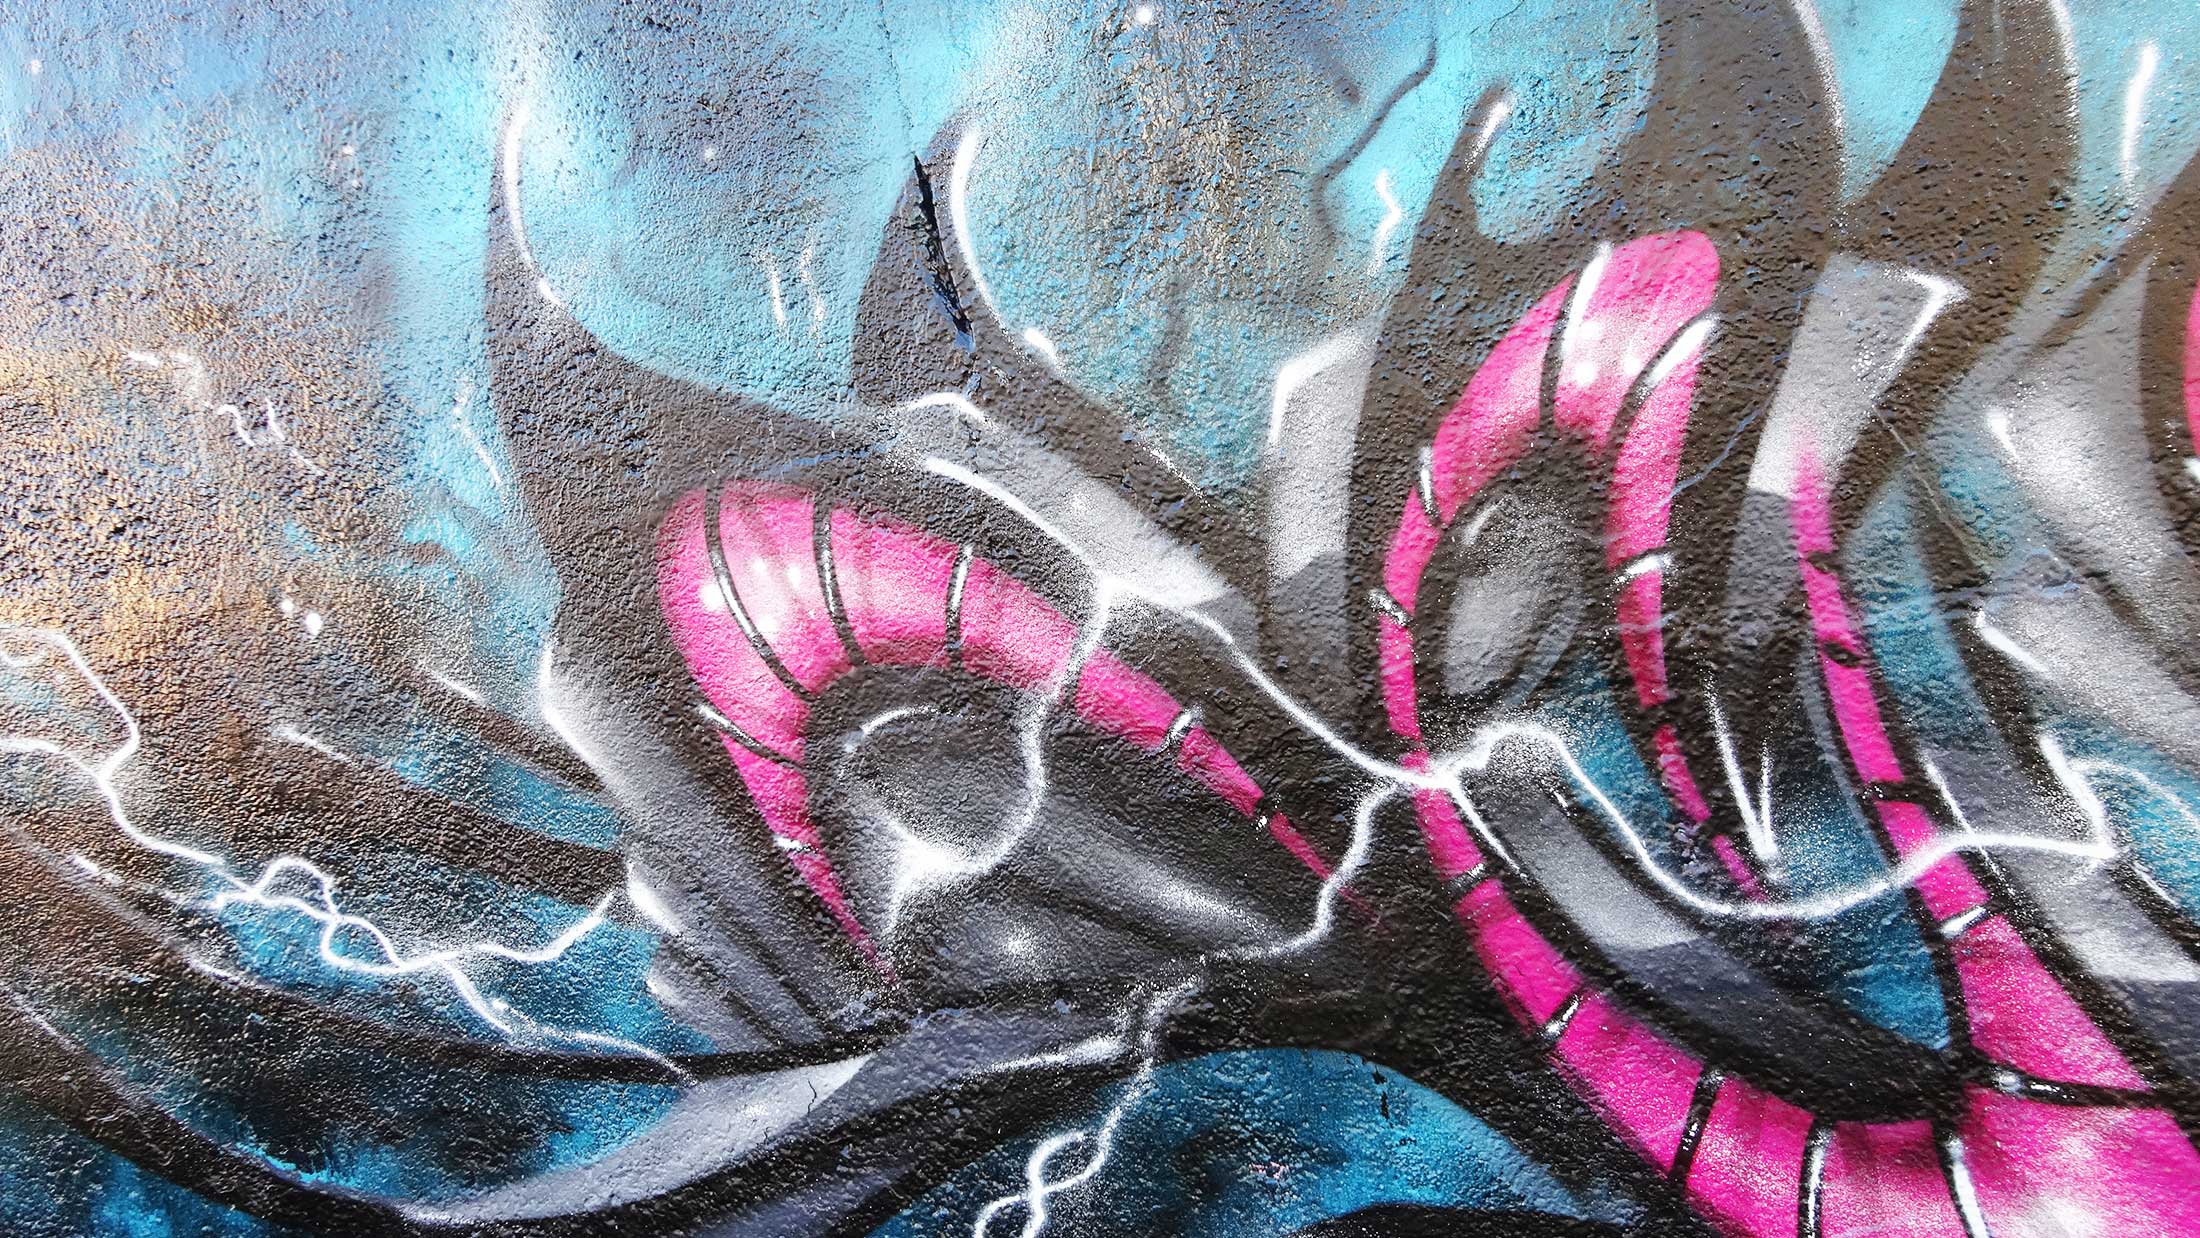 graffiti_Schroumph_deft_2013_3